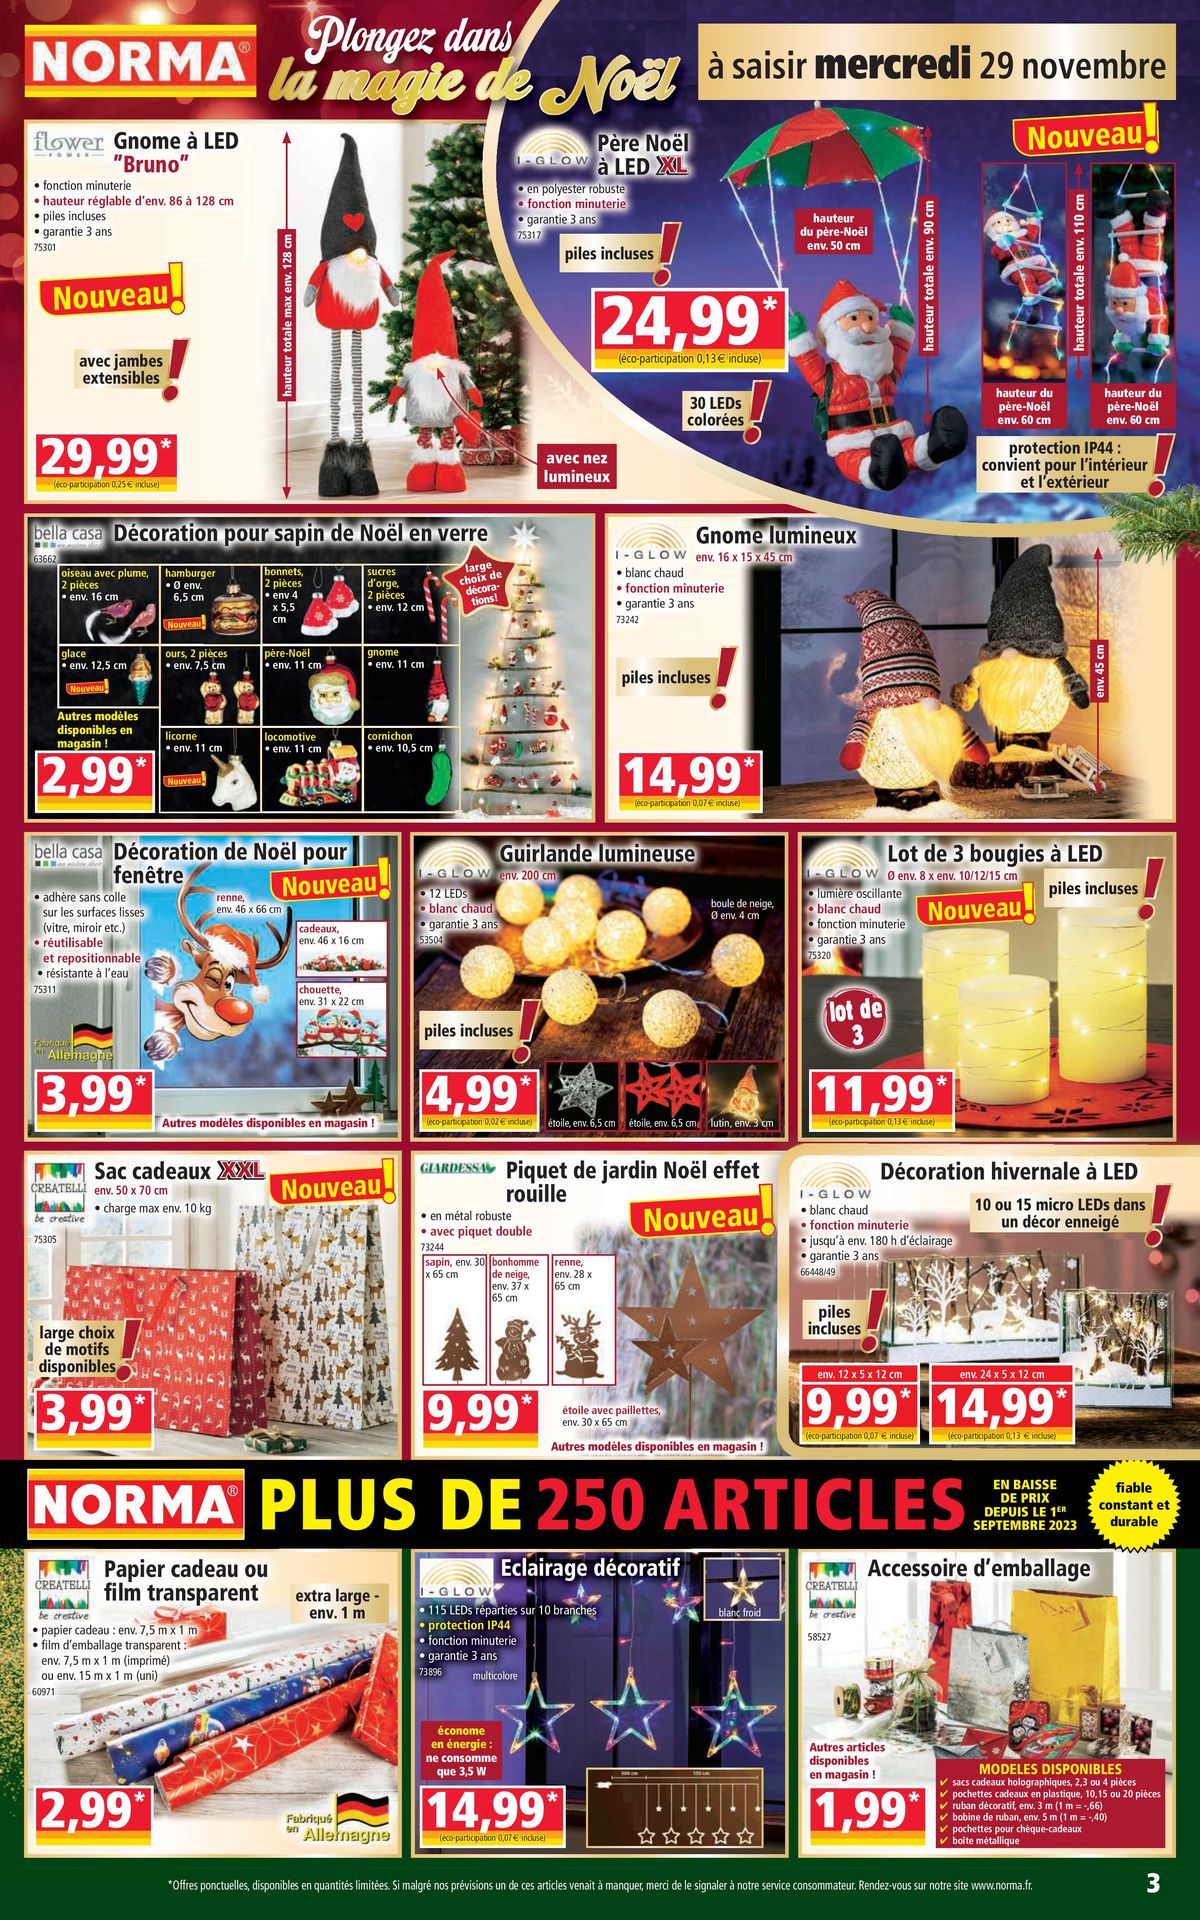 Catalogue Prix anti-inflation, page 00003